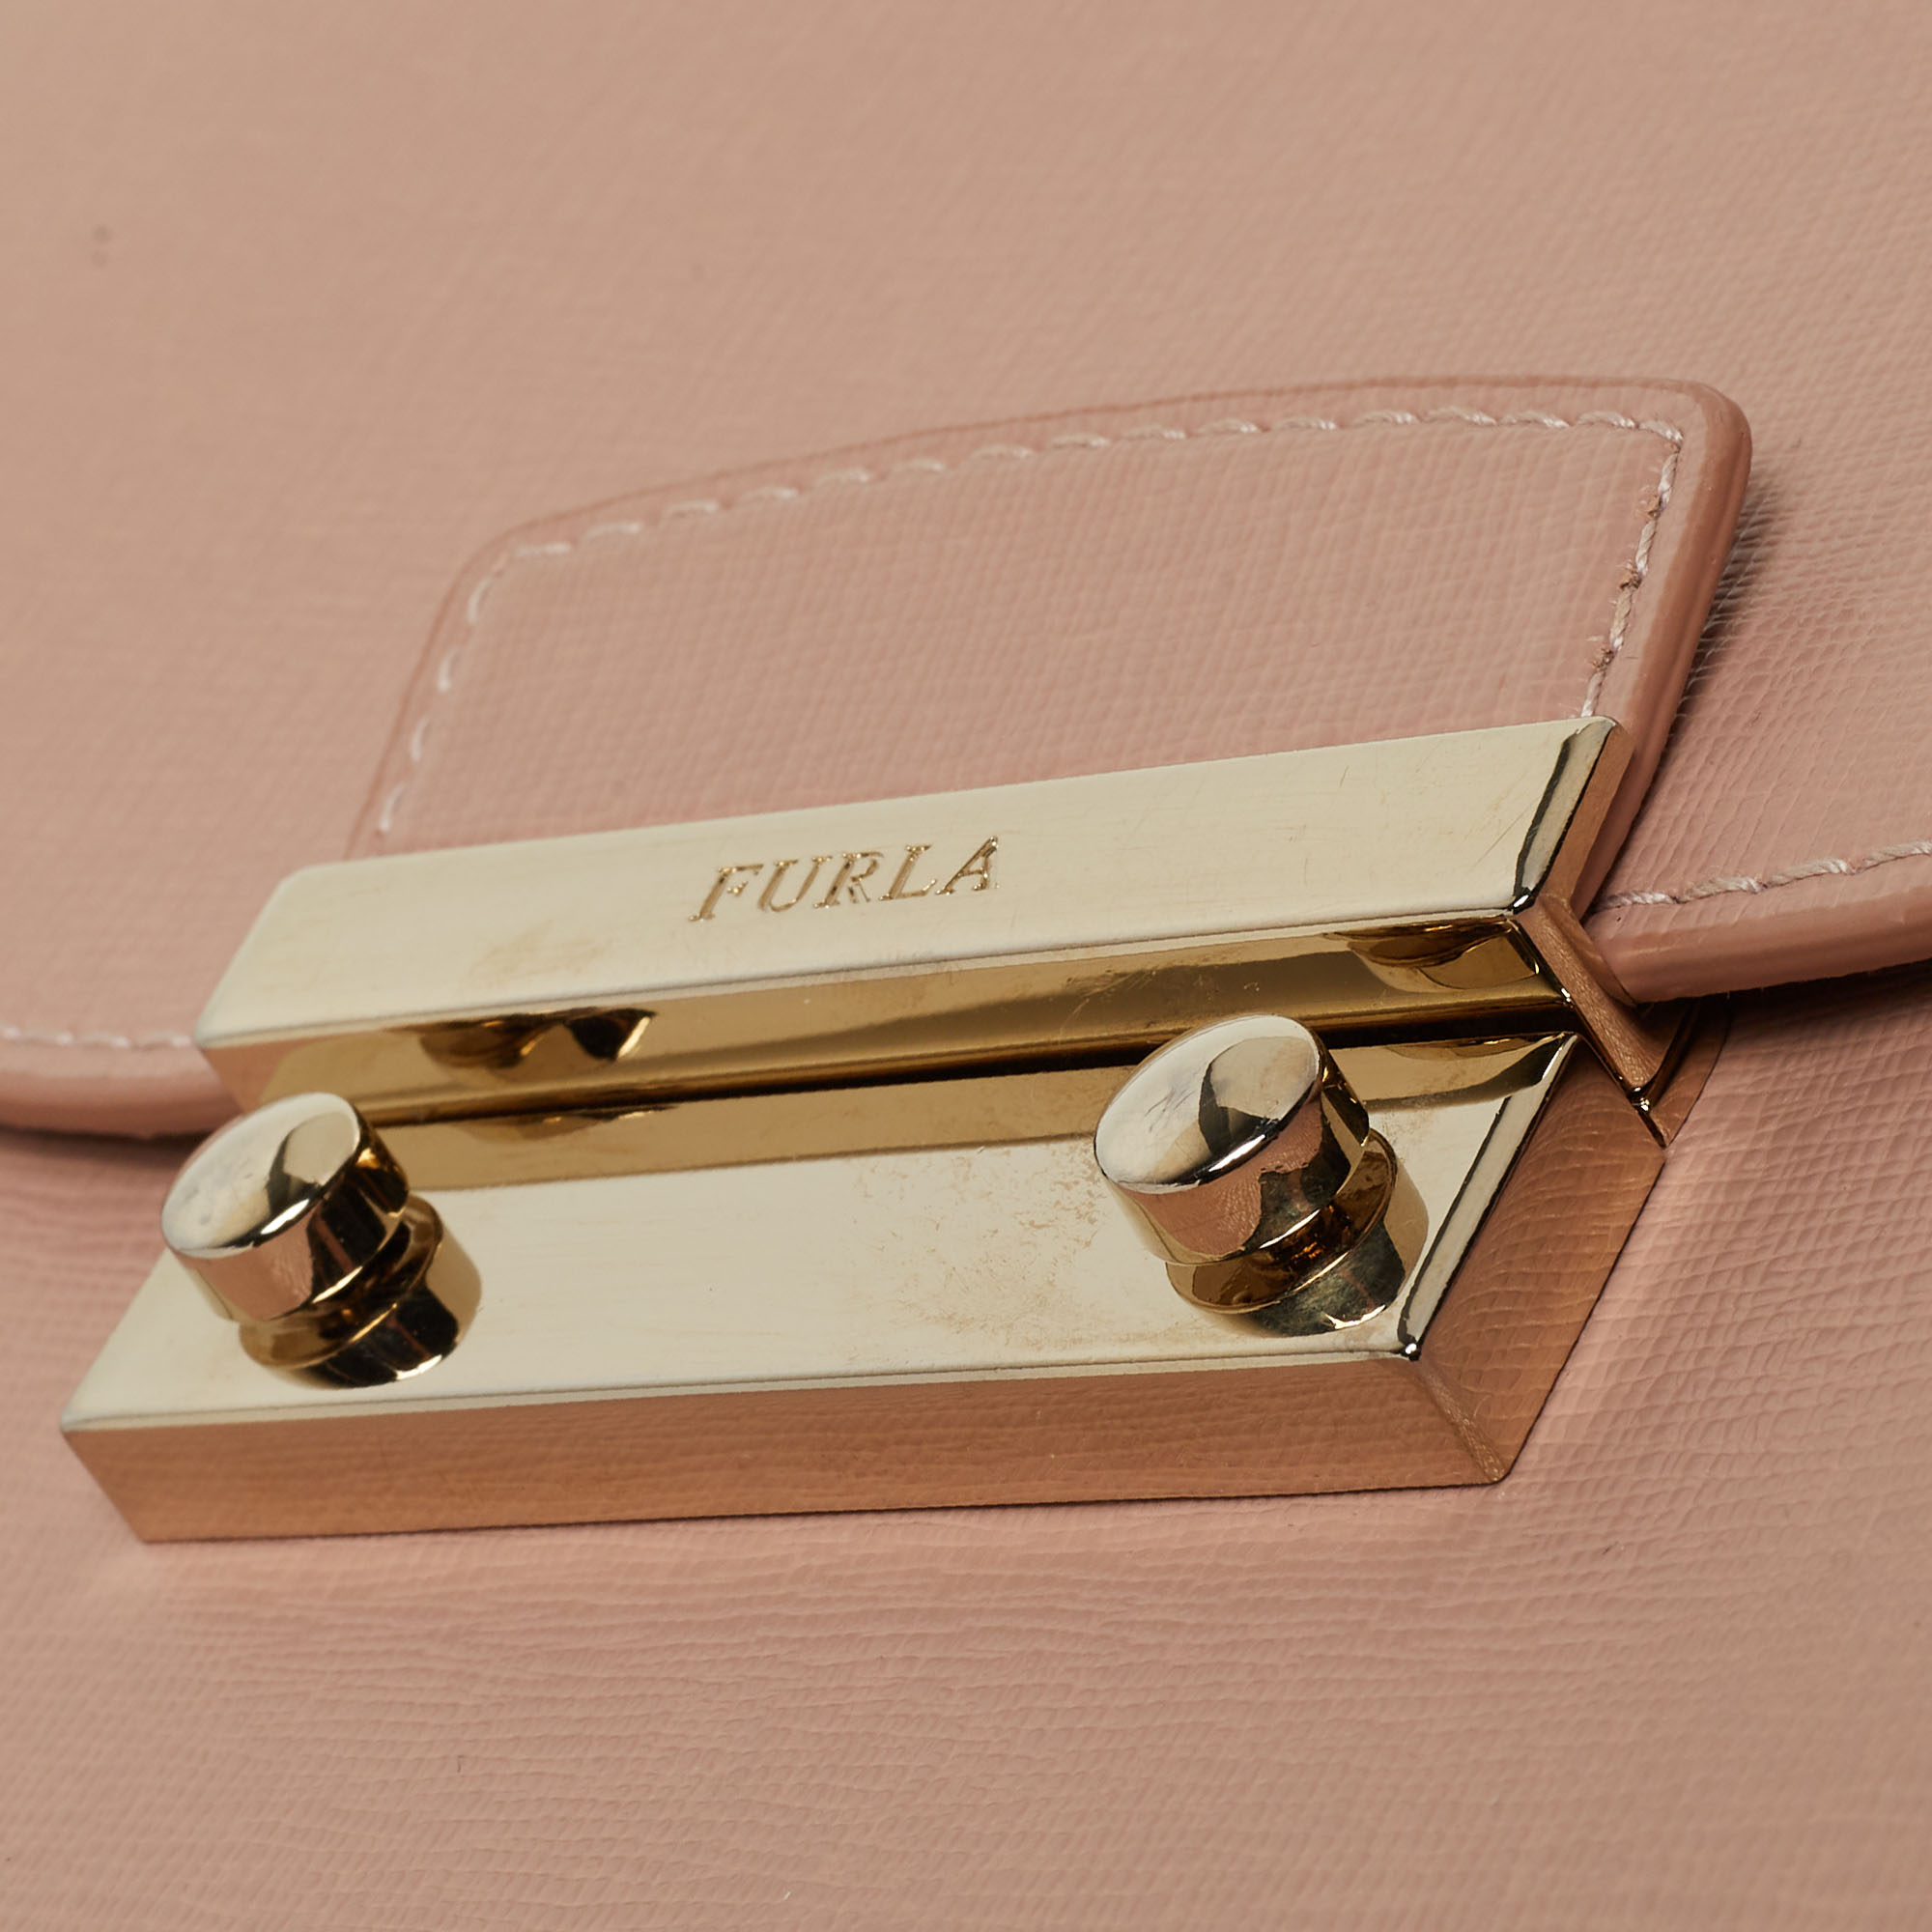 Furla Pink Leather Julia Top Handle Bag